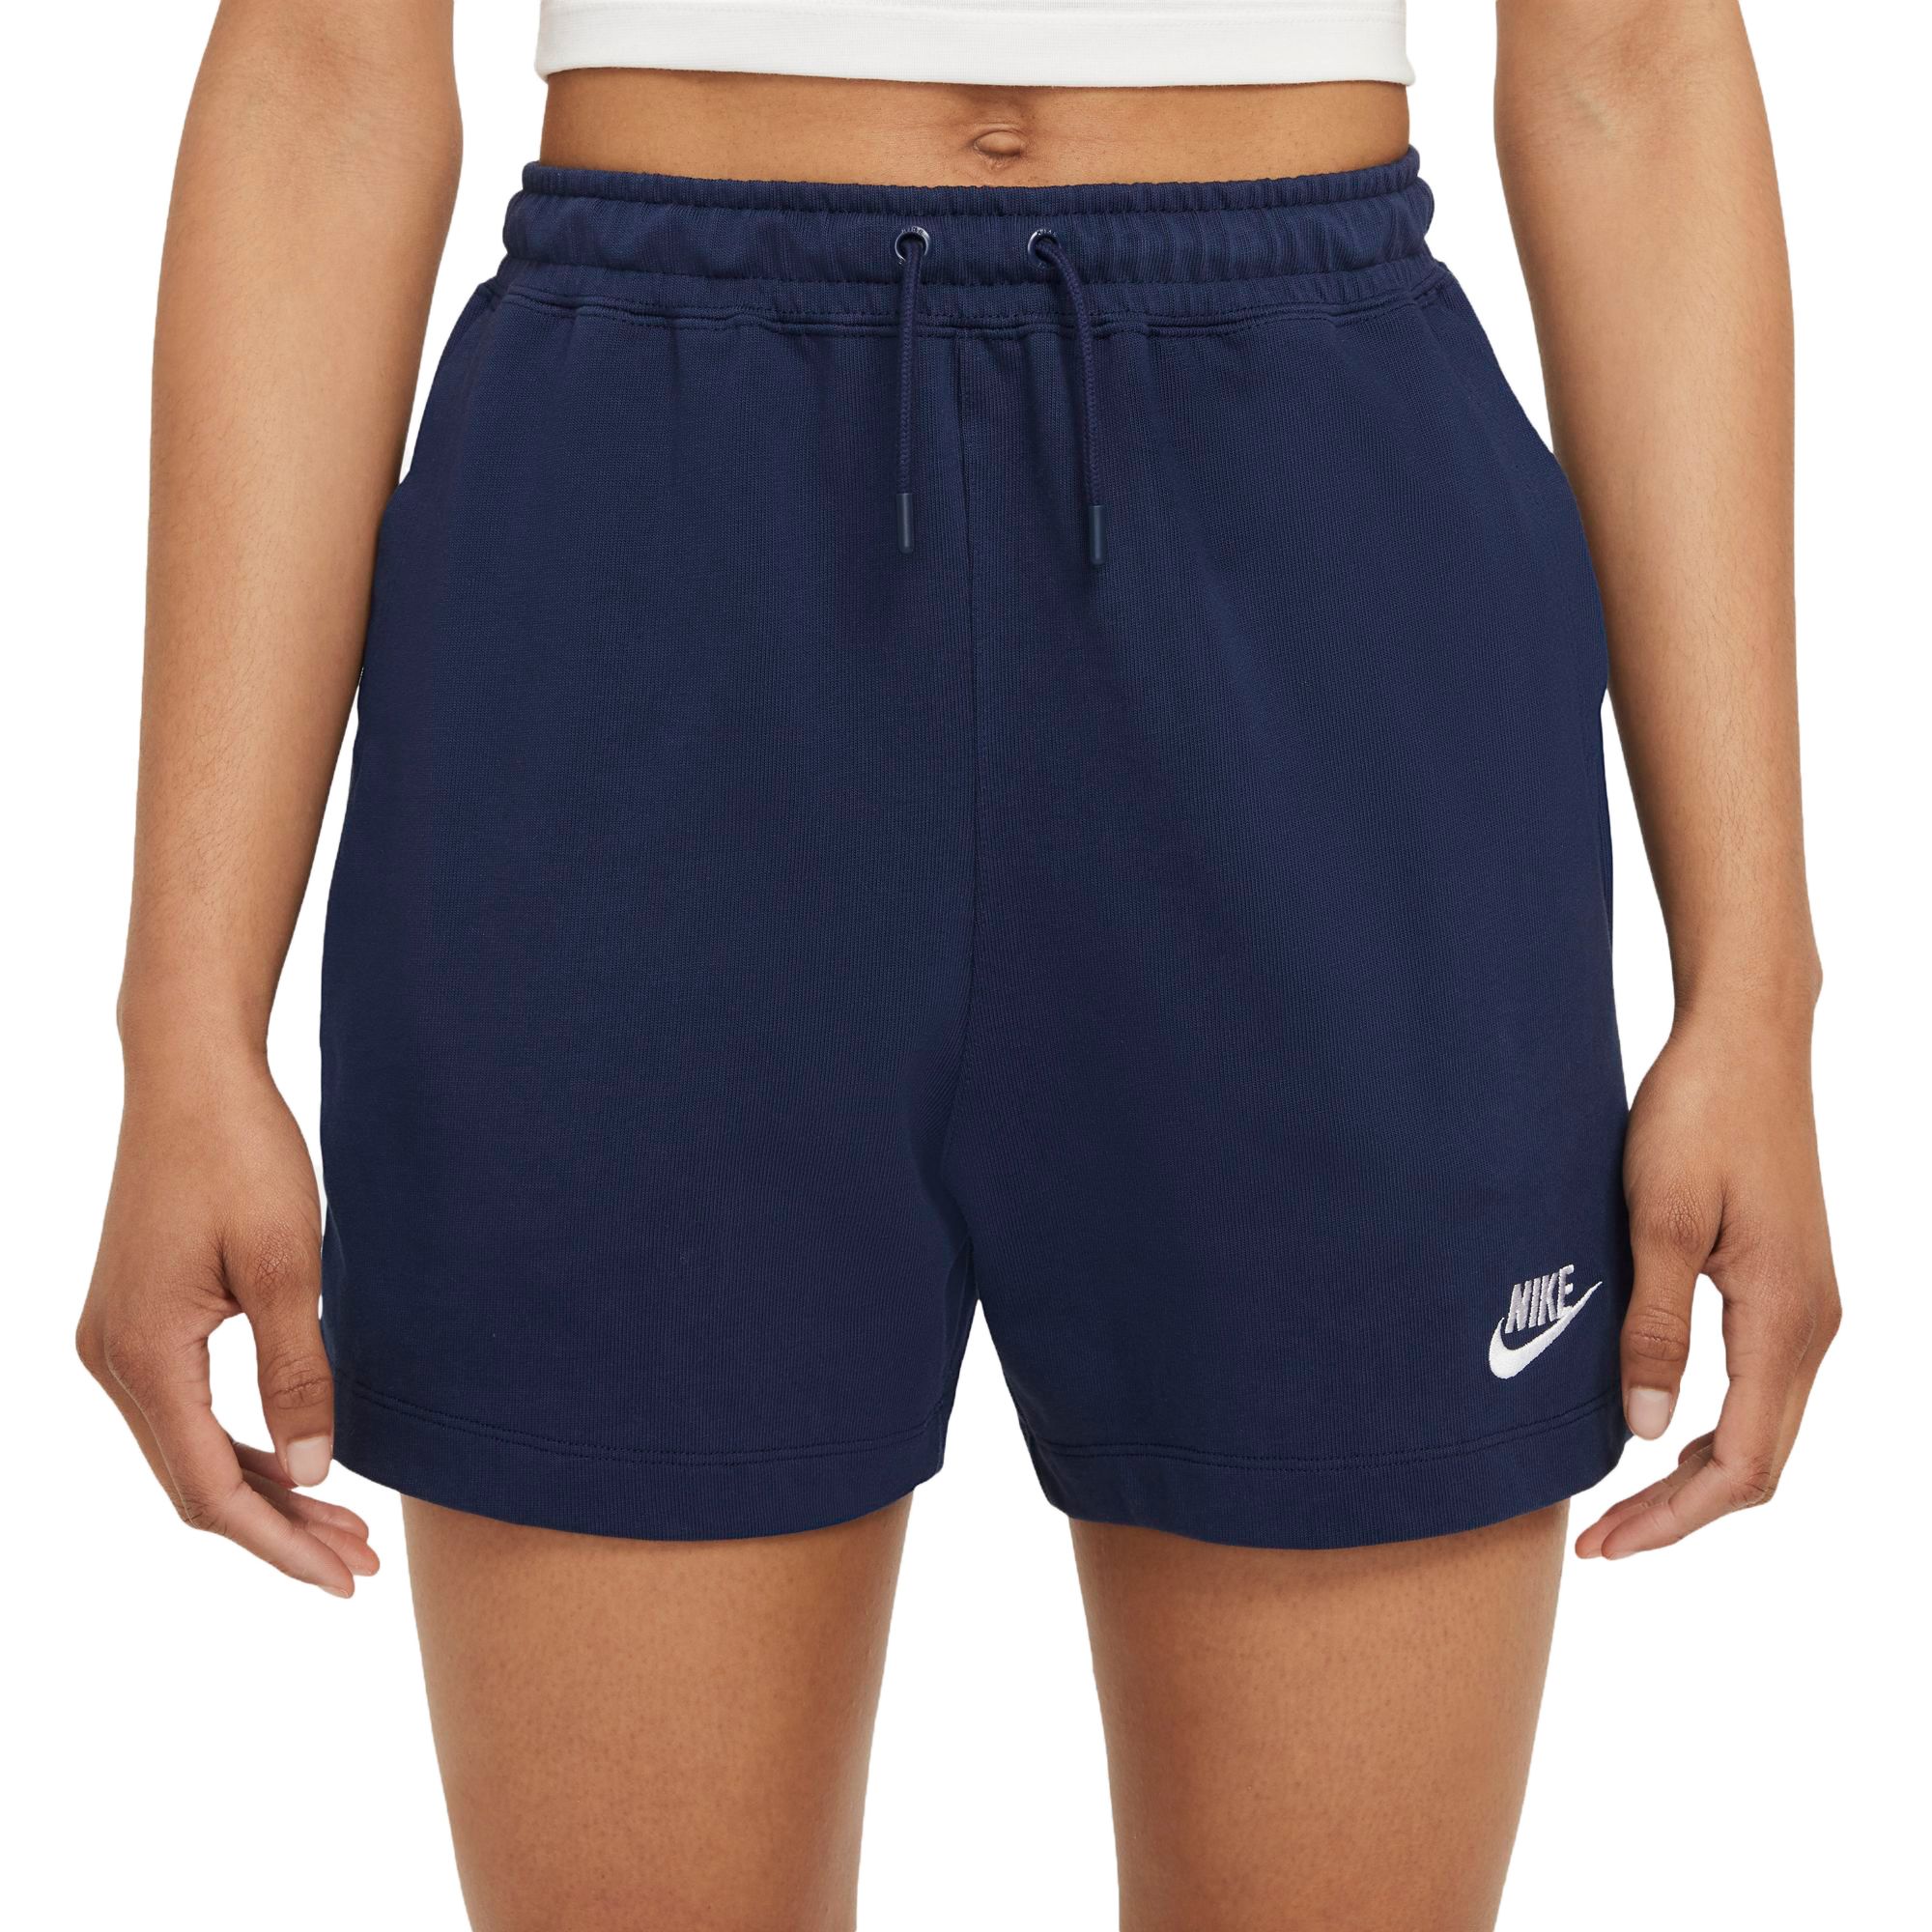 NIKE Sportswear Shorts 410 -